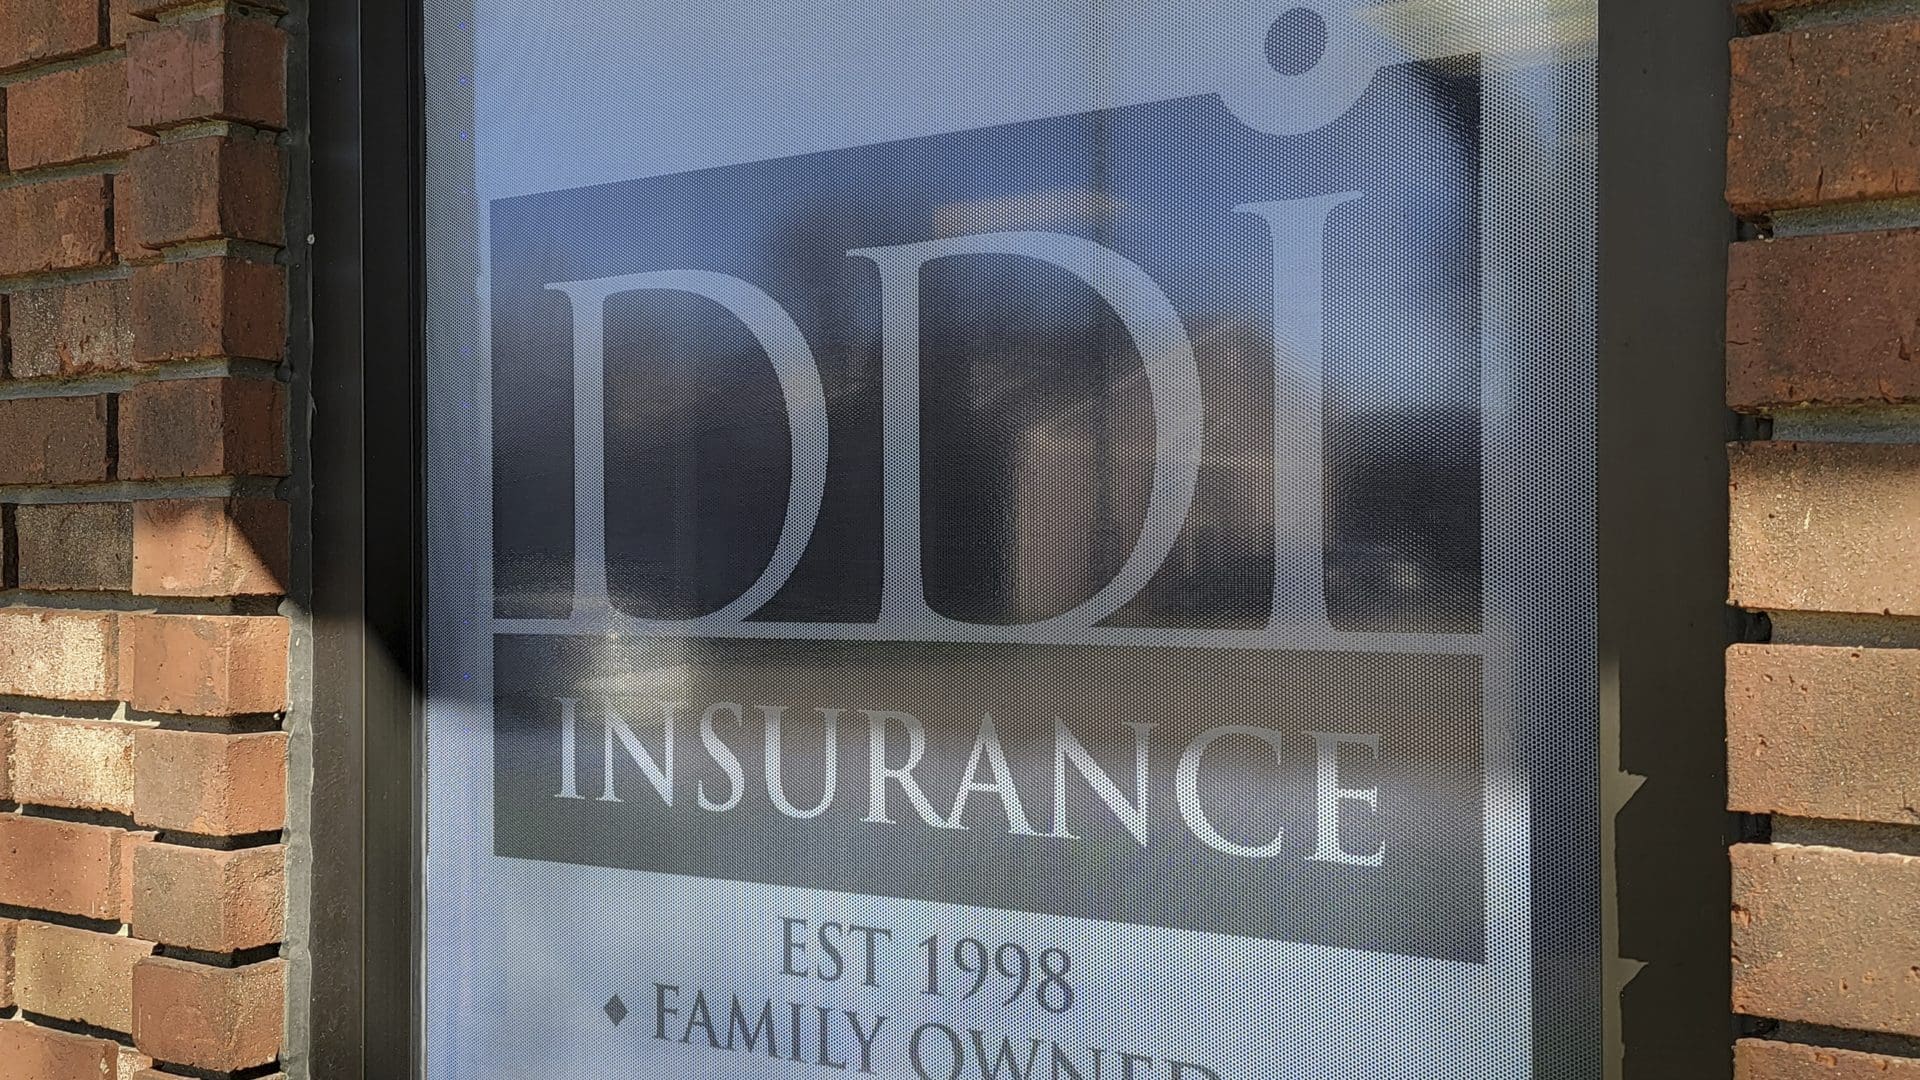 DDI Insurance – 1-Way Window Graphics